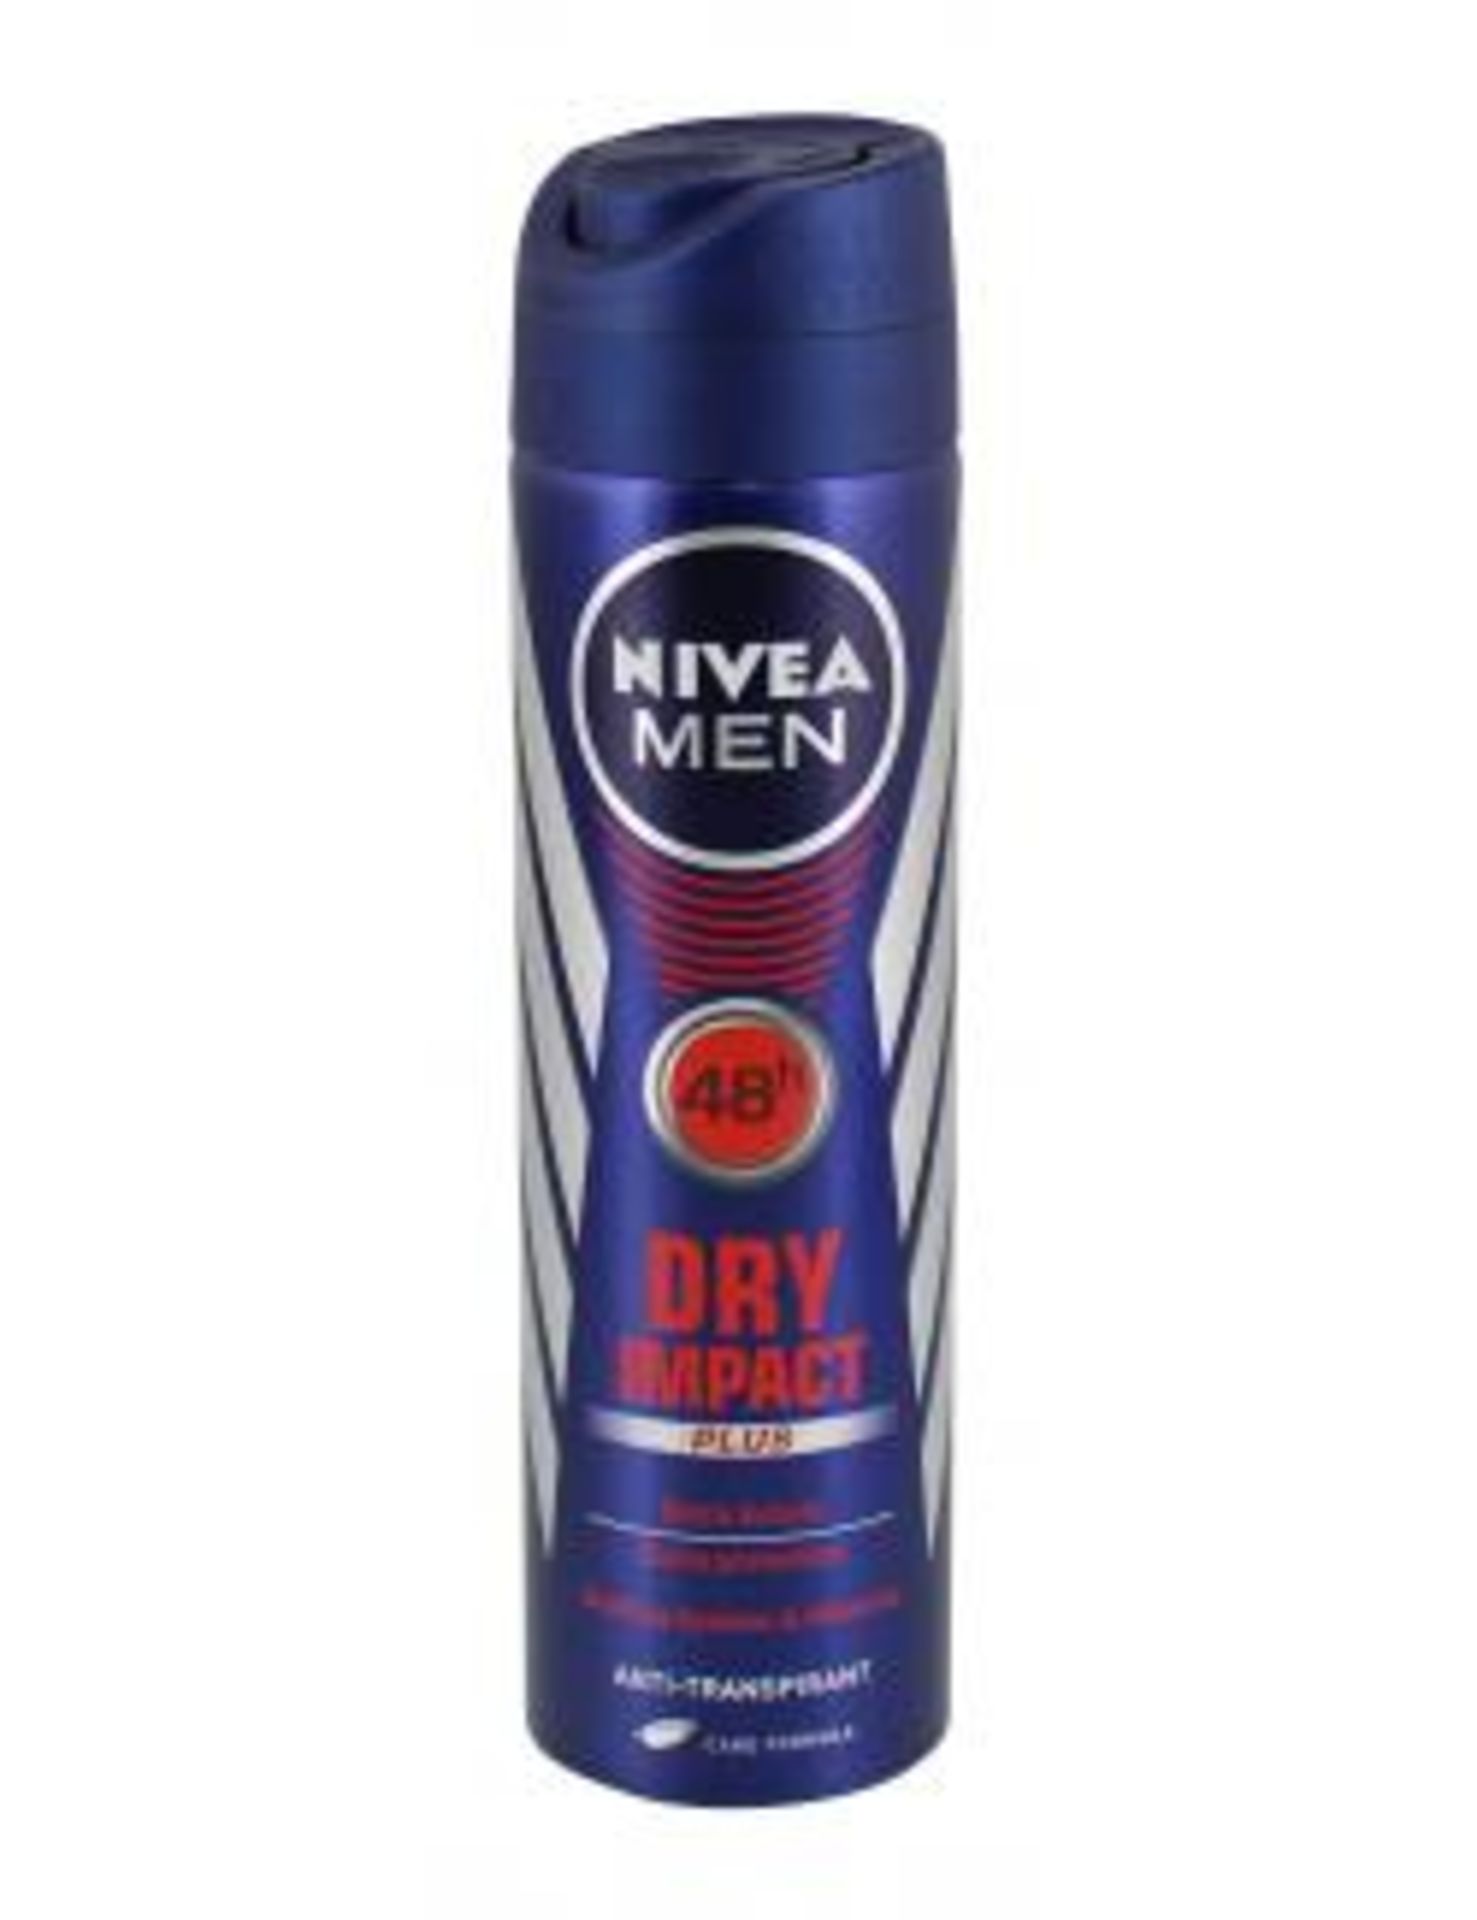 V Brand New Six Cans Of Nivea Men 48 Hour Dry Impact Plus Anti-Transpirant SRP2.99 Ea